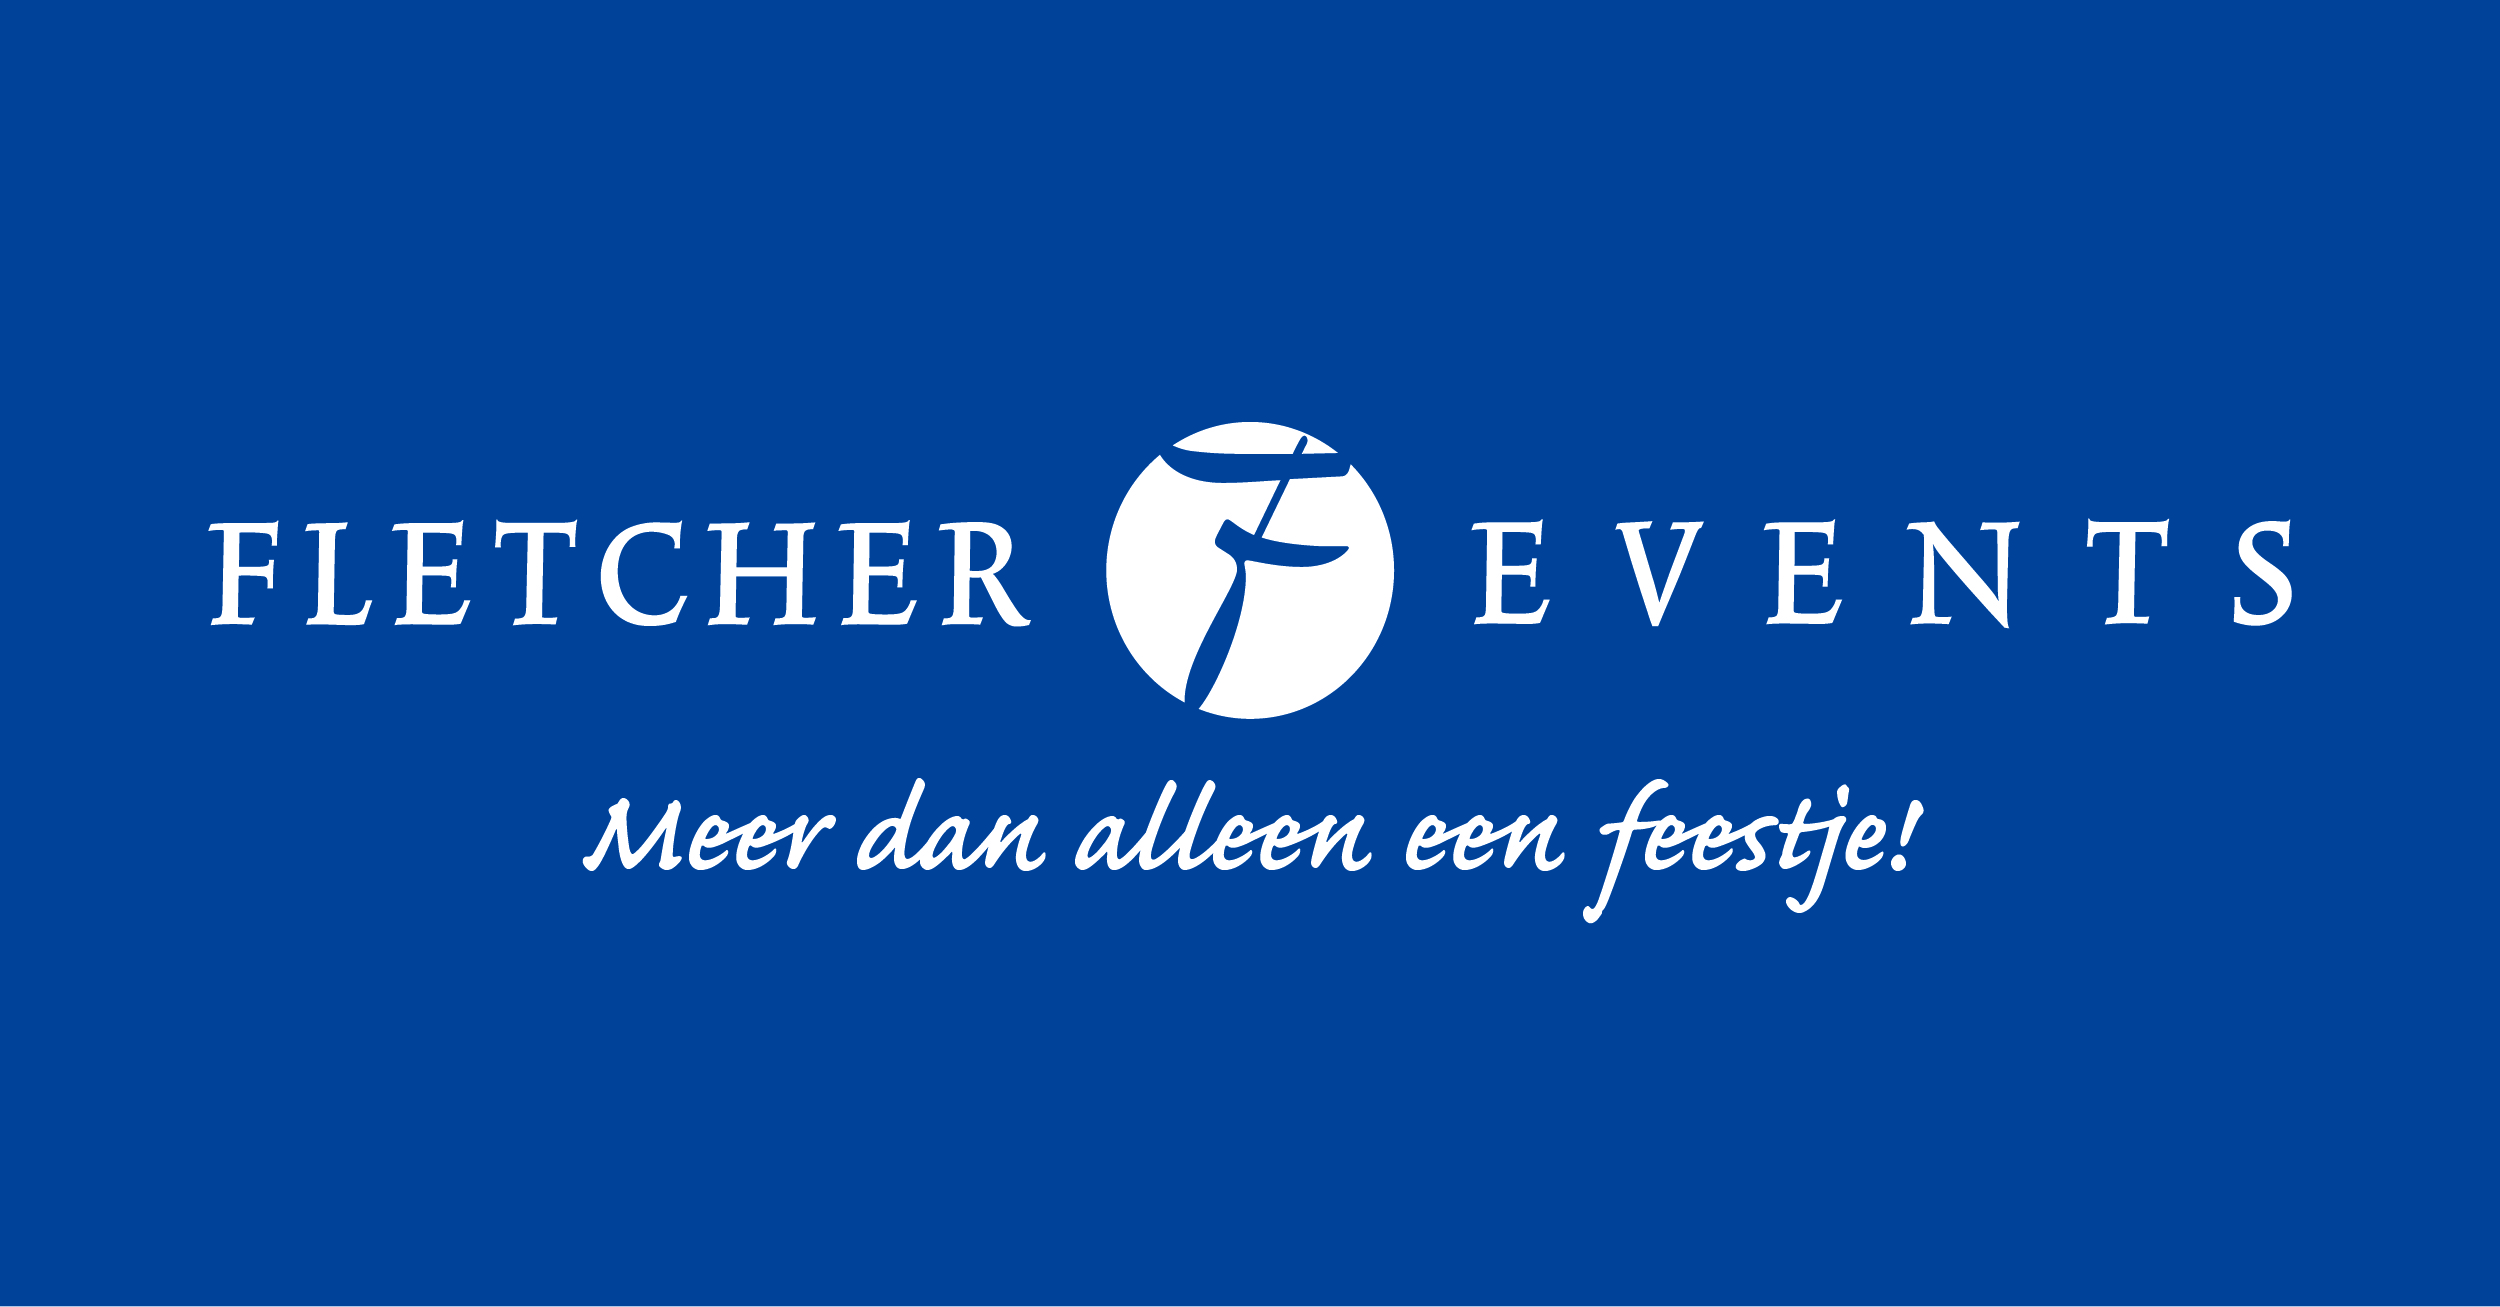 (c) Fletcherevents.nl